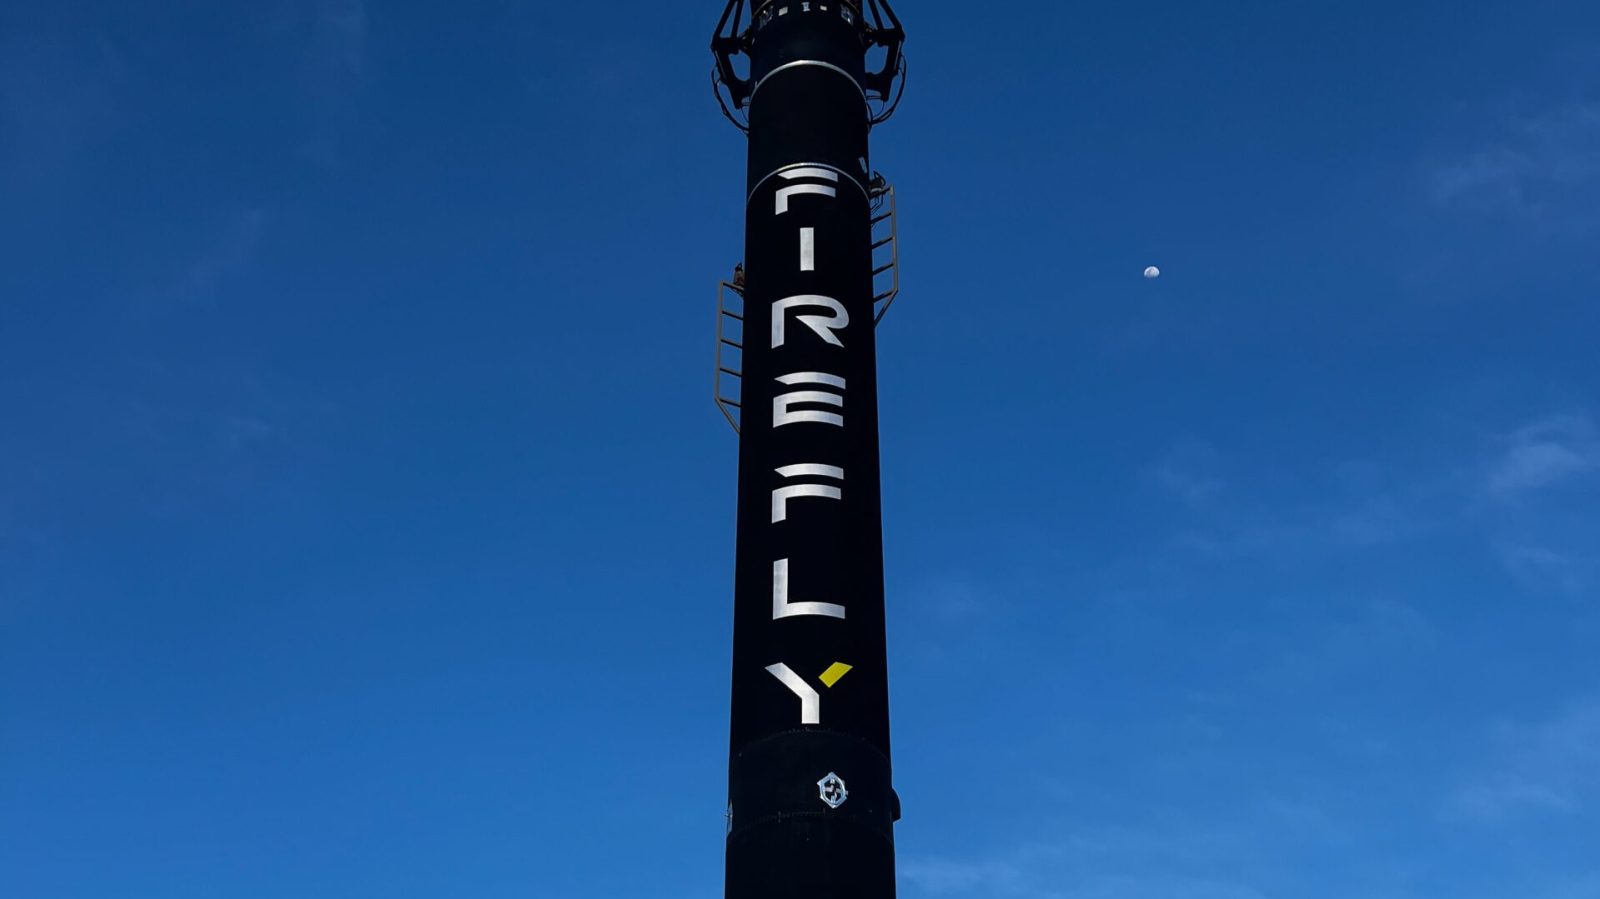 Firefly Alpha rocket